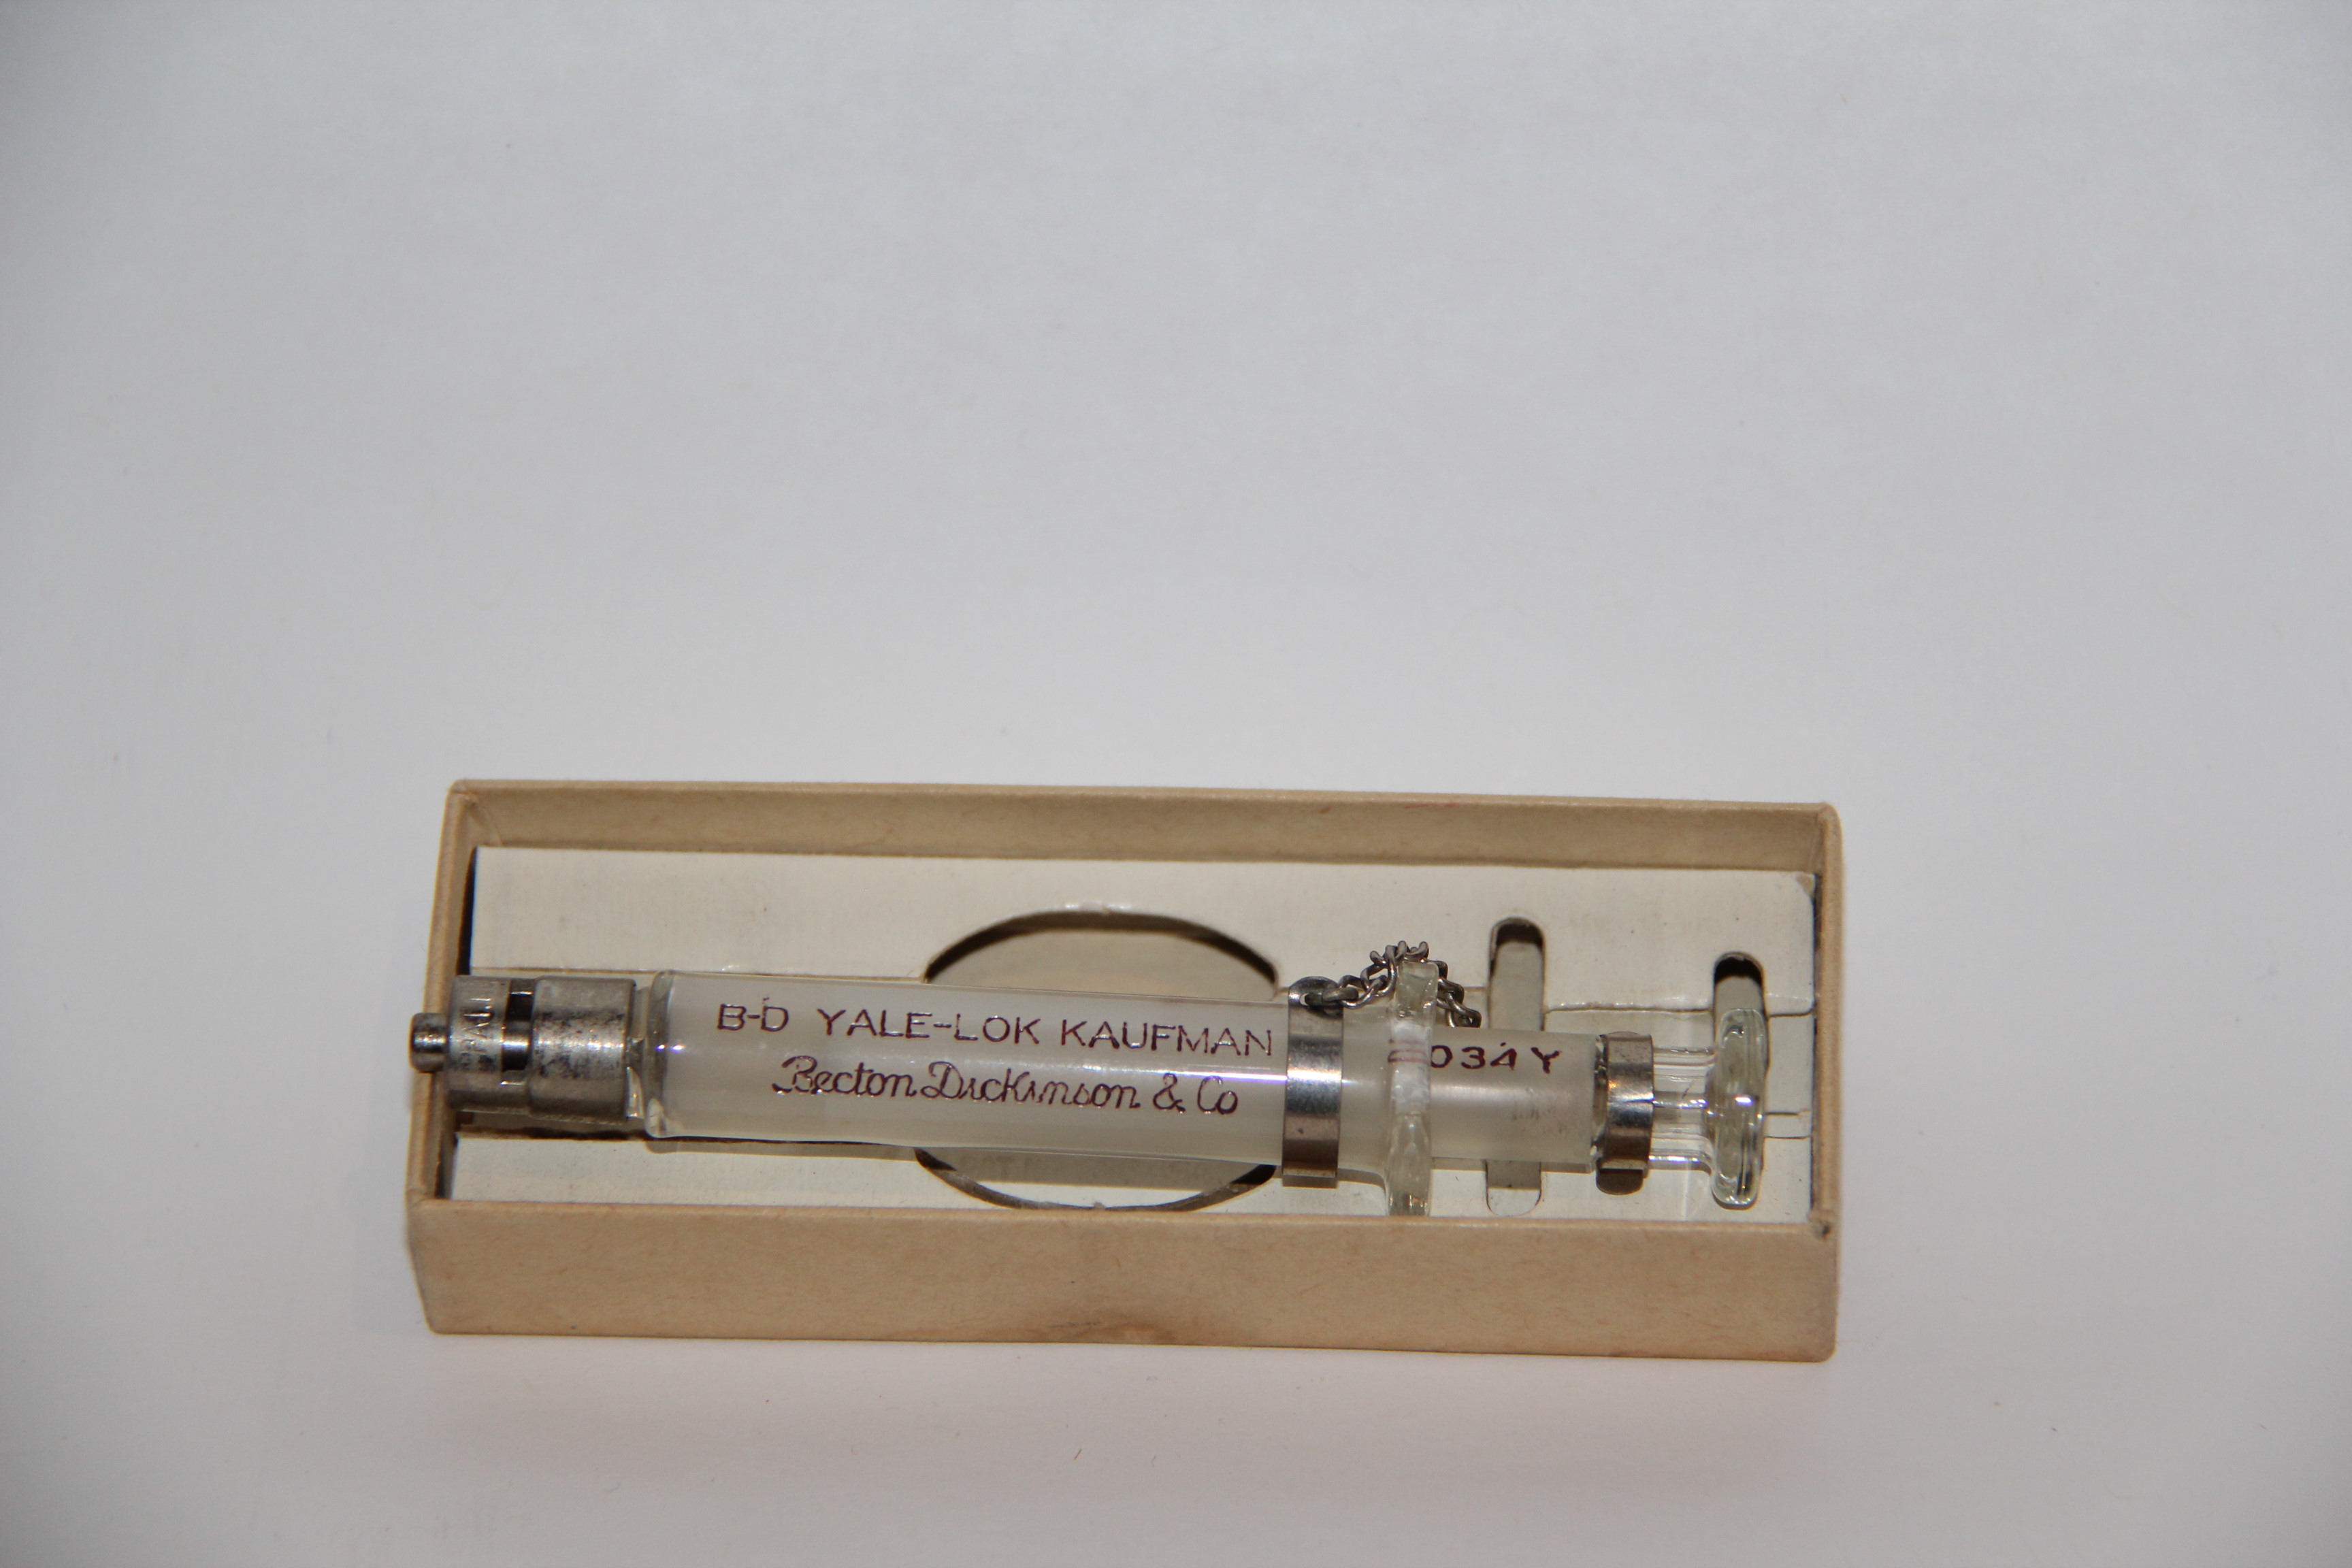 Kaufman gravity syringe